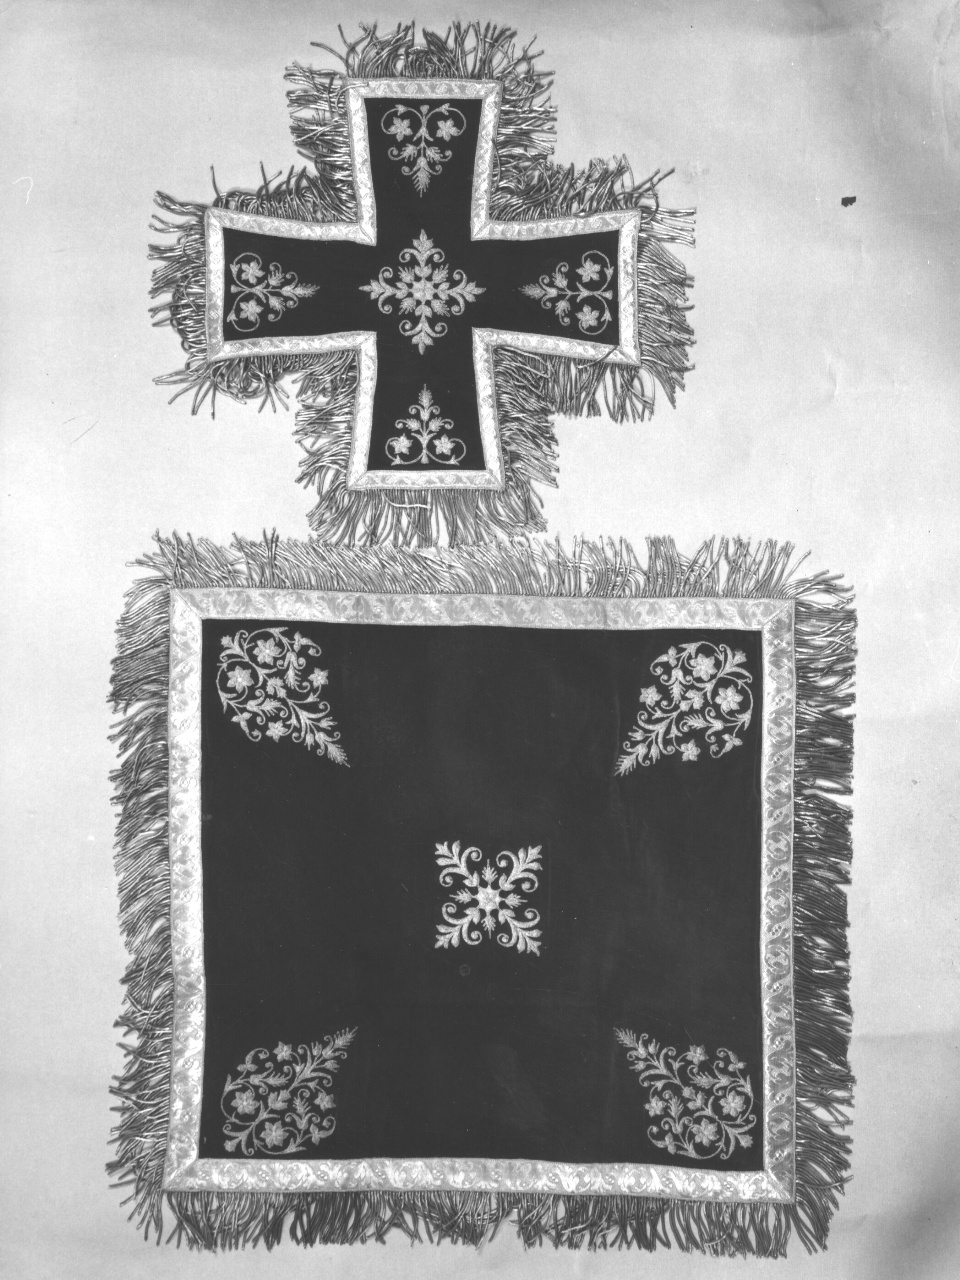 motivi decorativi floreali (velo, pendant) - manifattura russa (sec. XIX)